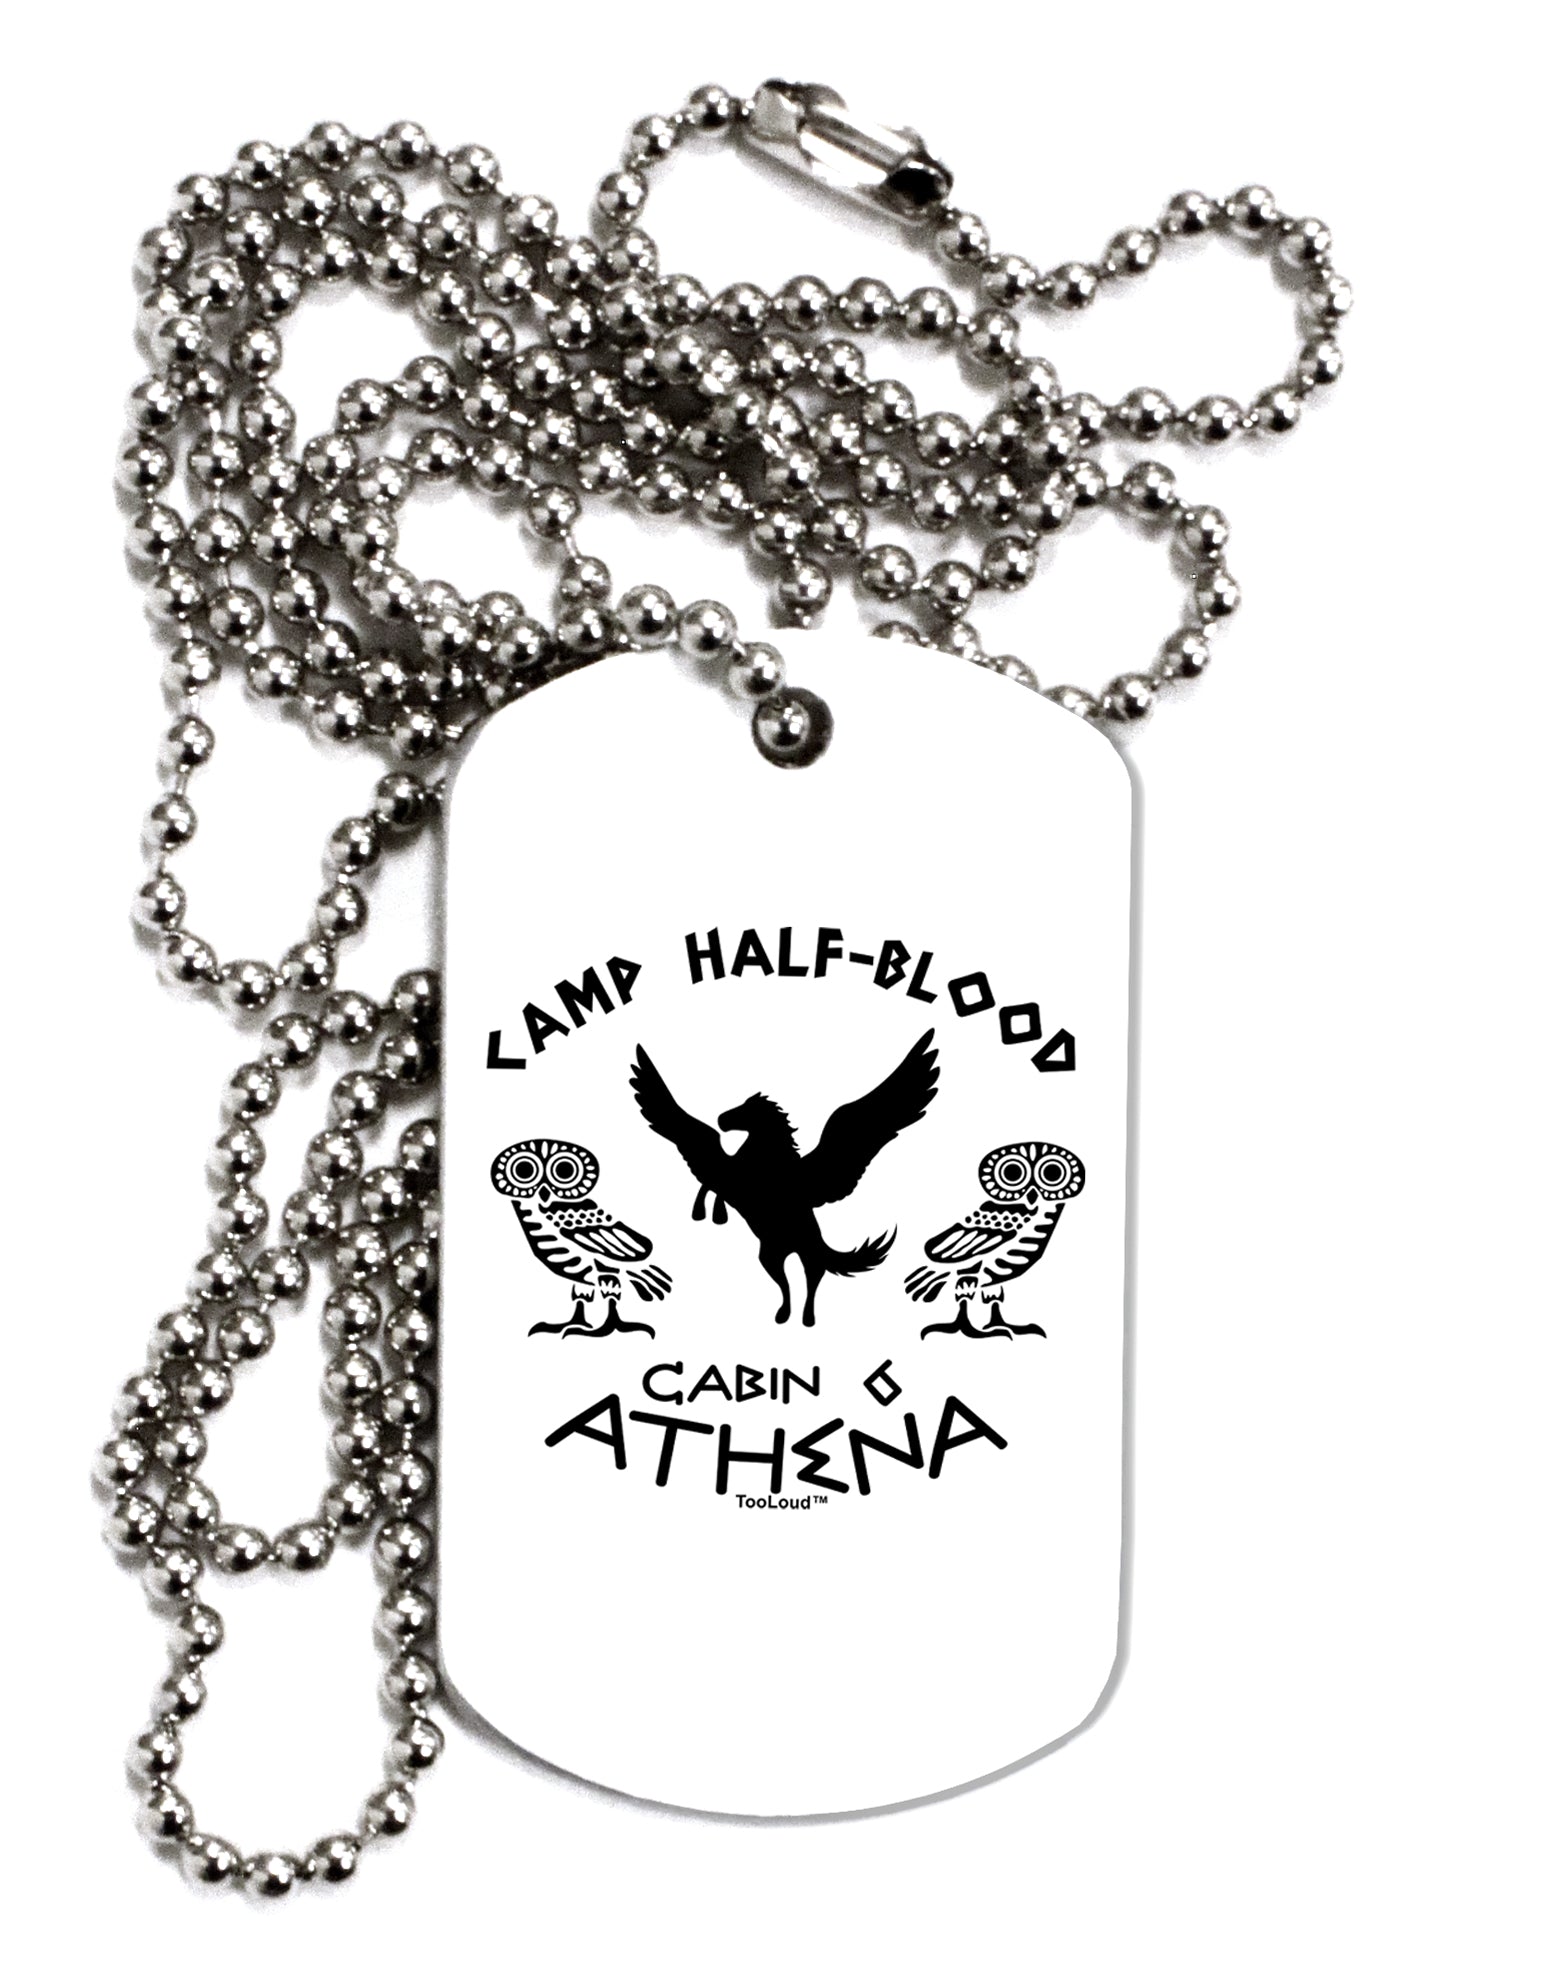 Handmade Percy Jackson Camp Necklace | Shopee Philippines